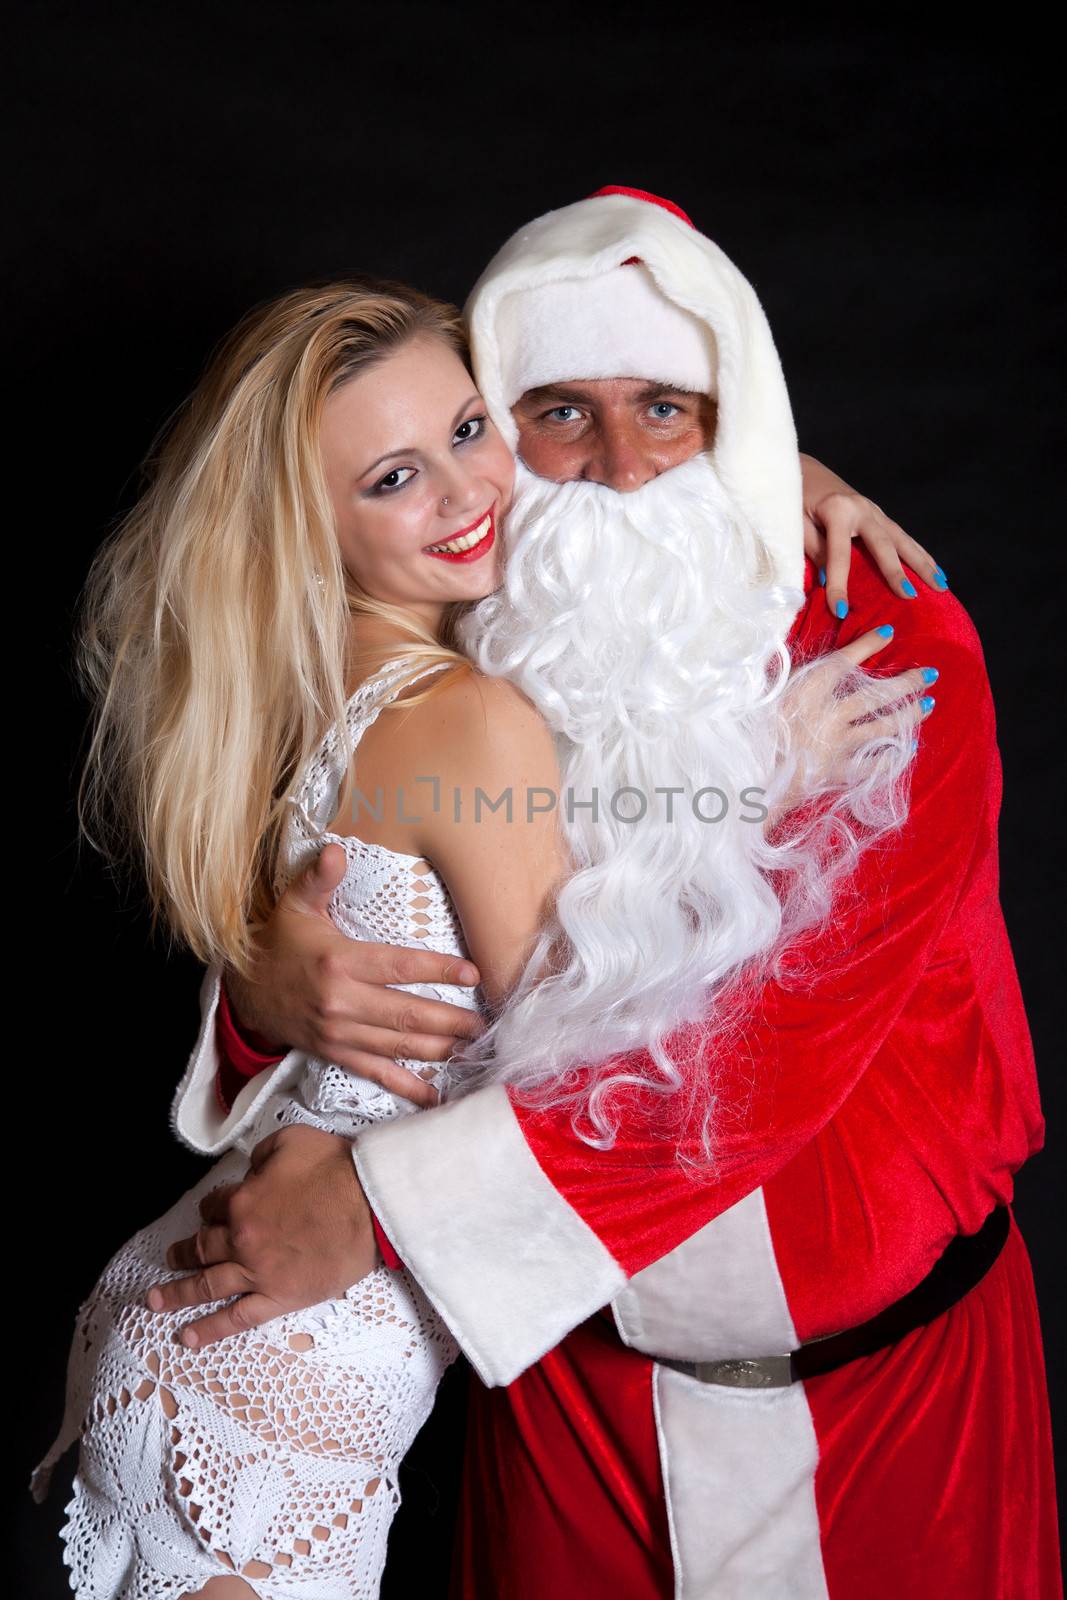 Man Santa Claus hugging a woman angel on a black background